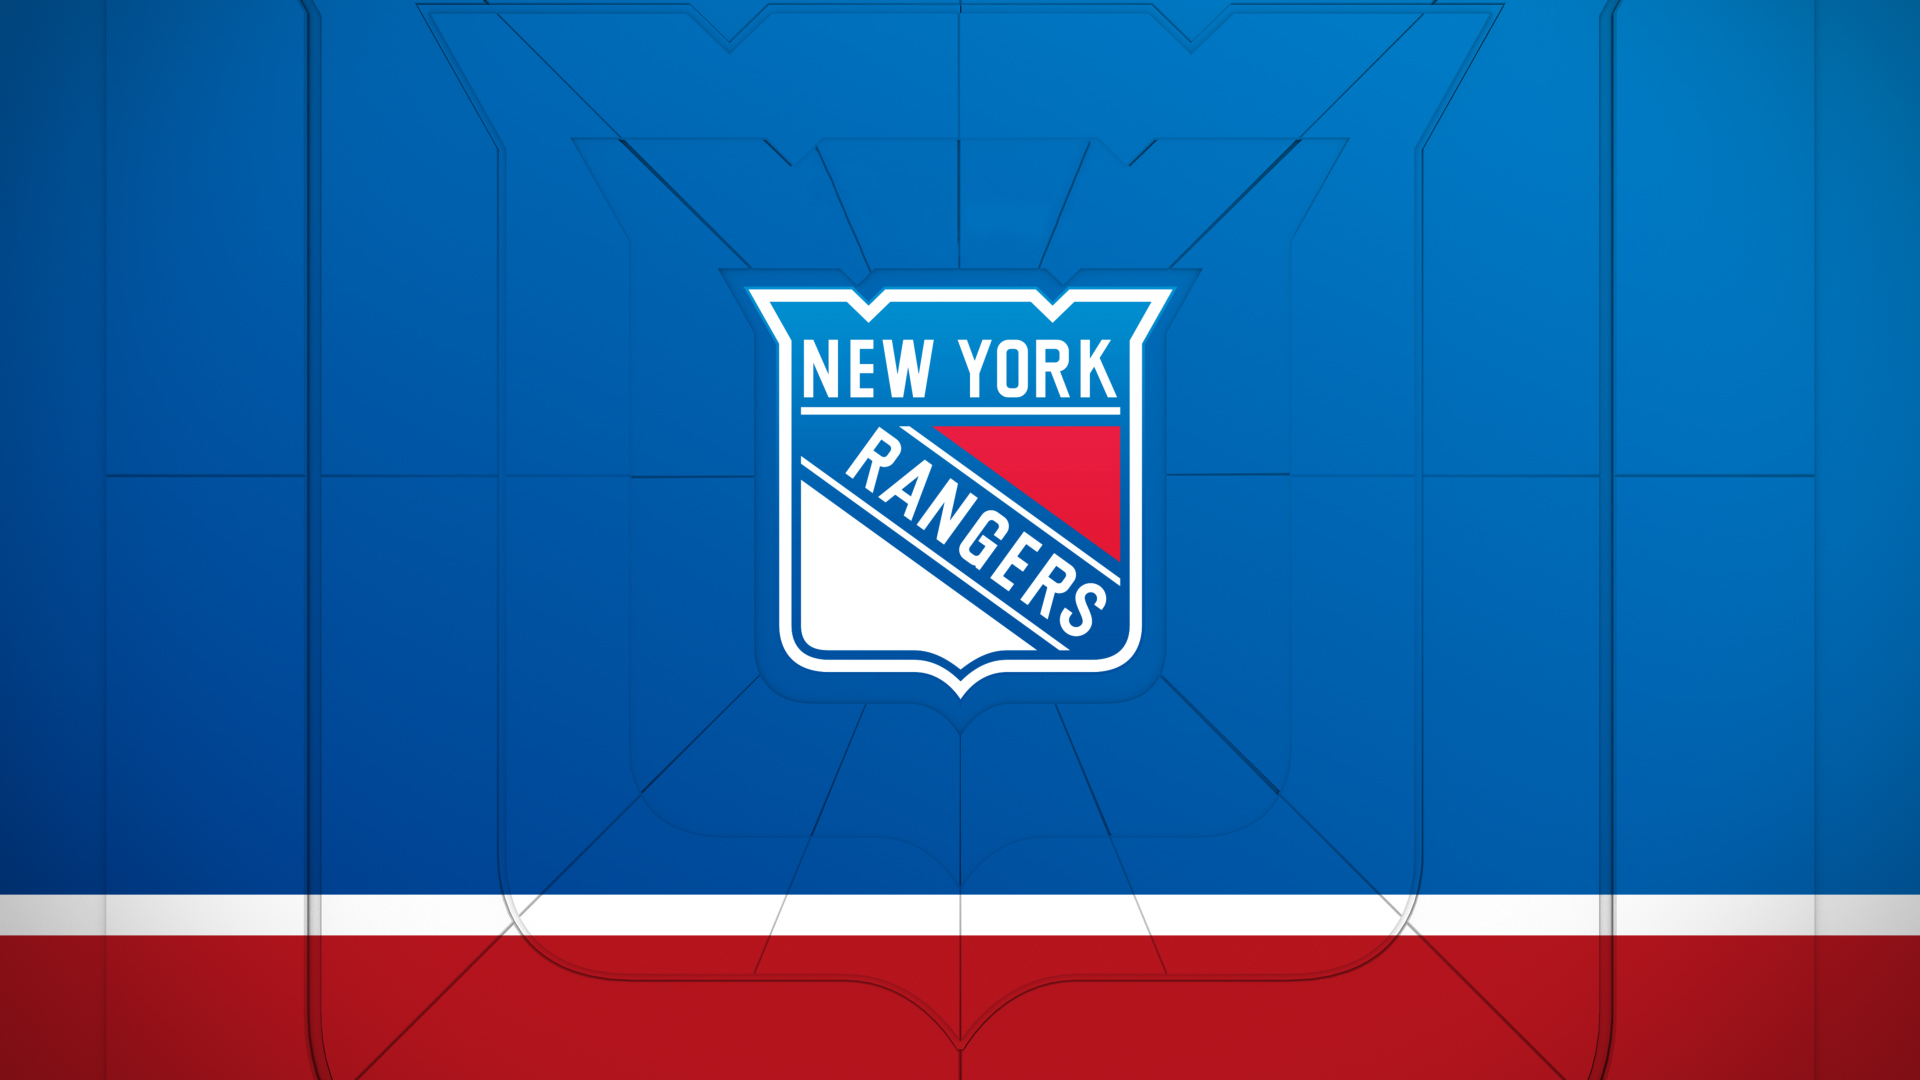 Official New York Rangers Website